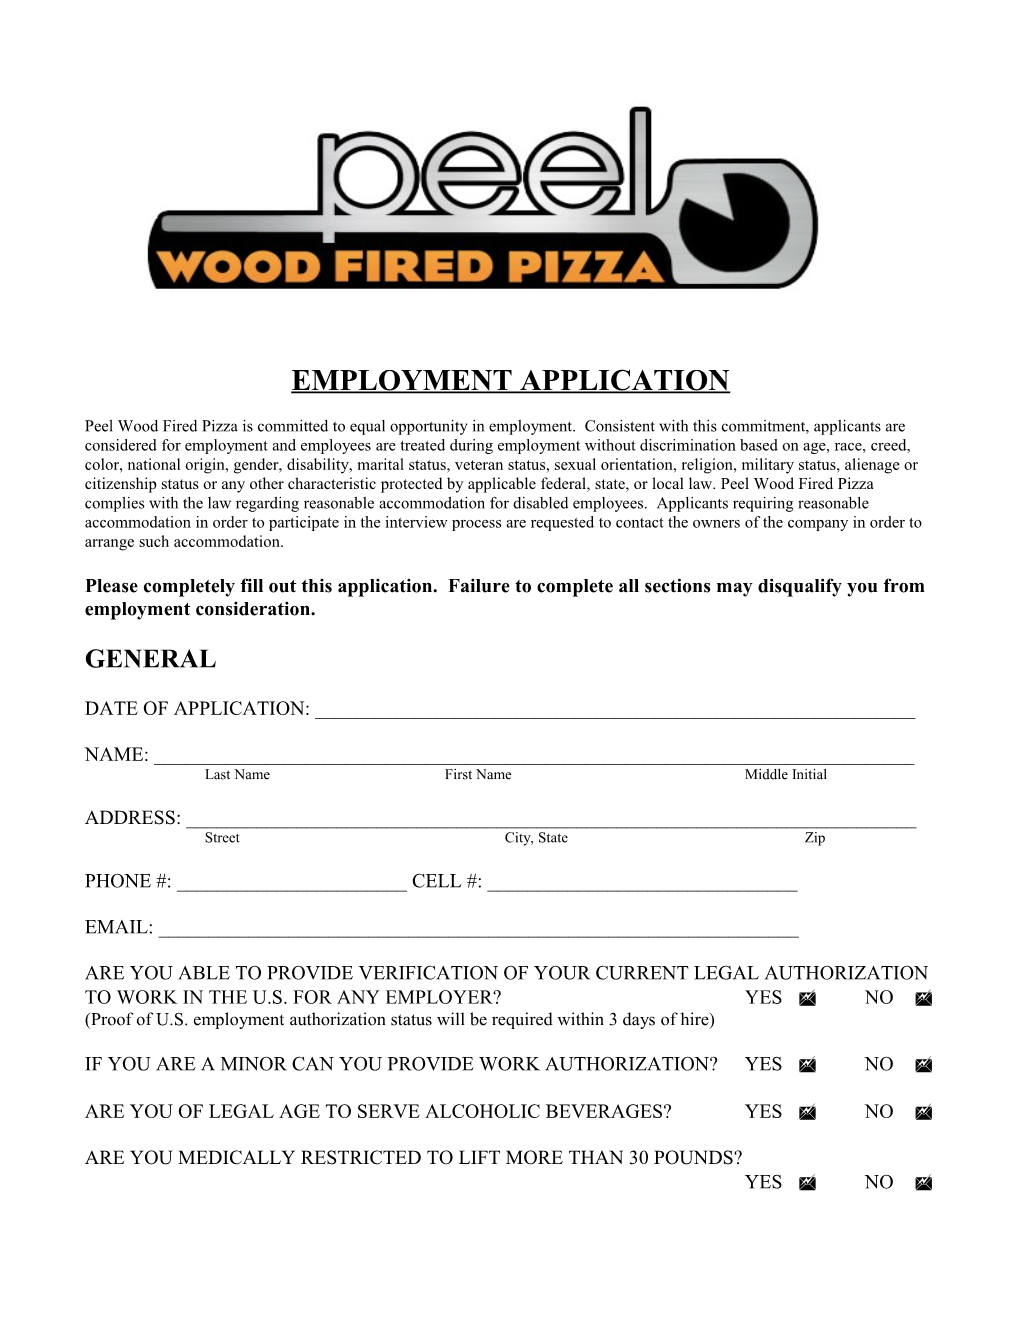 Employment Application s5